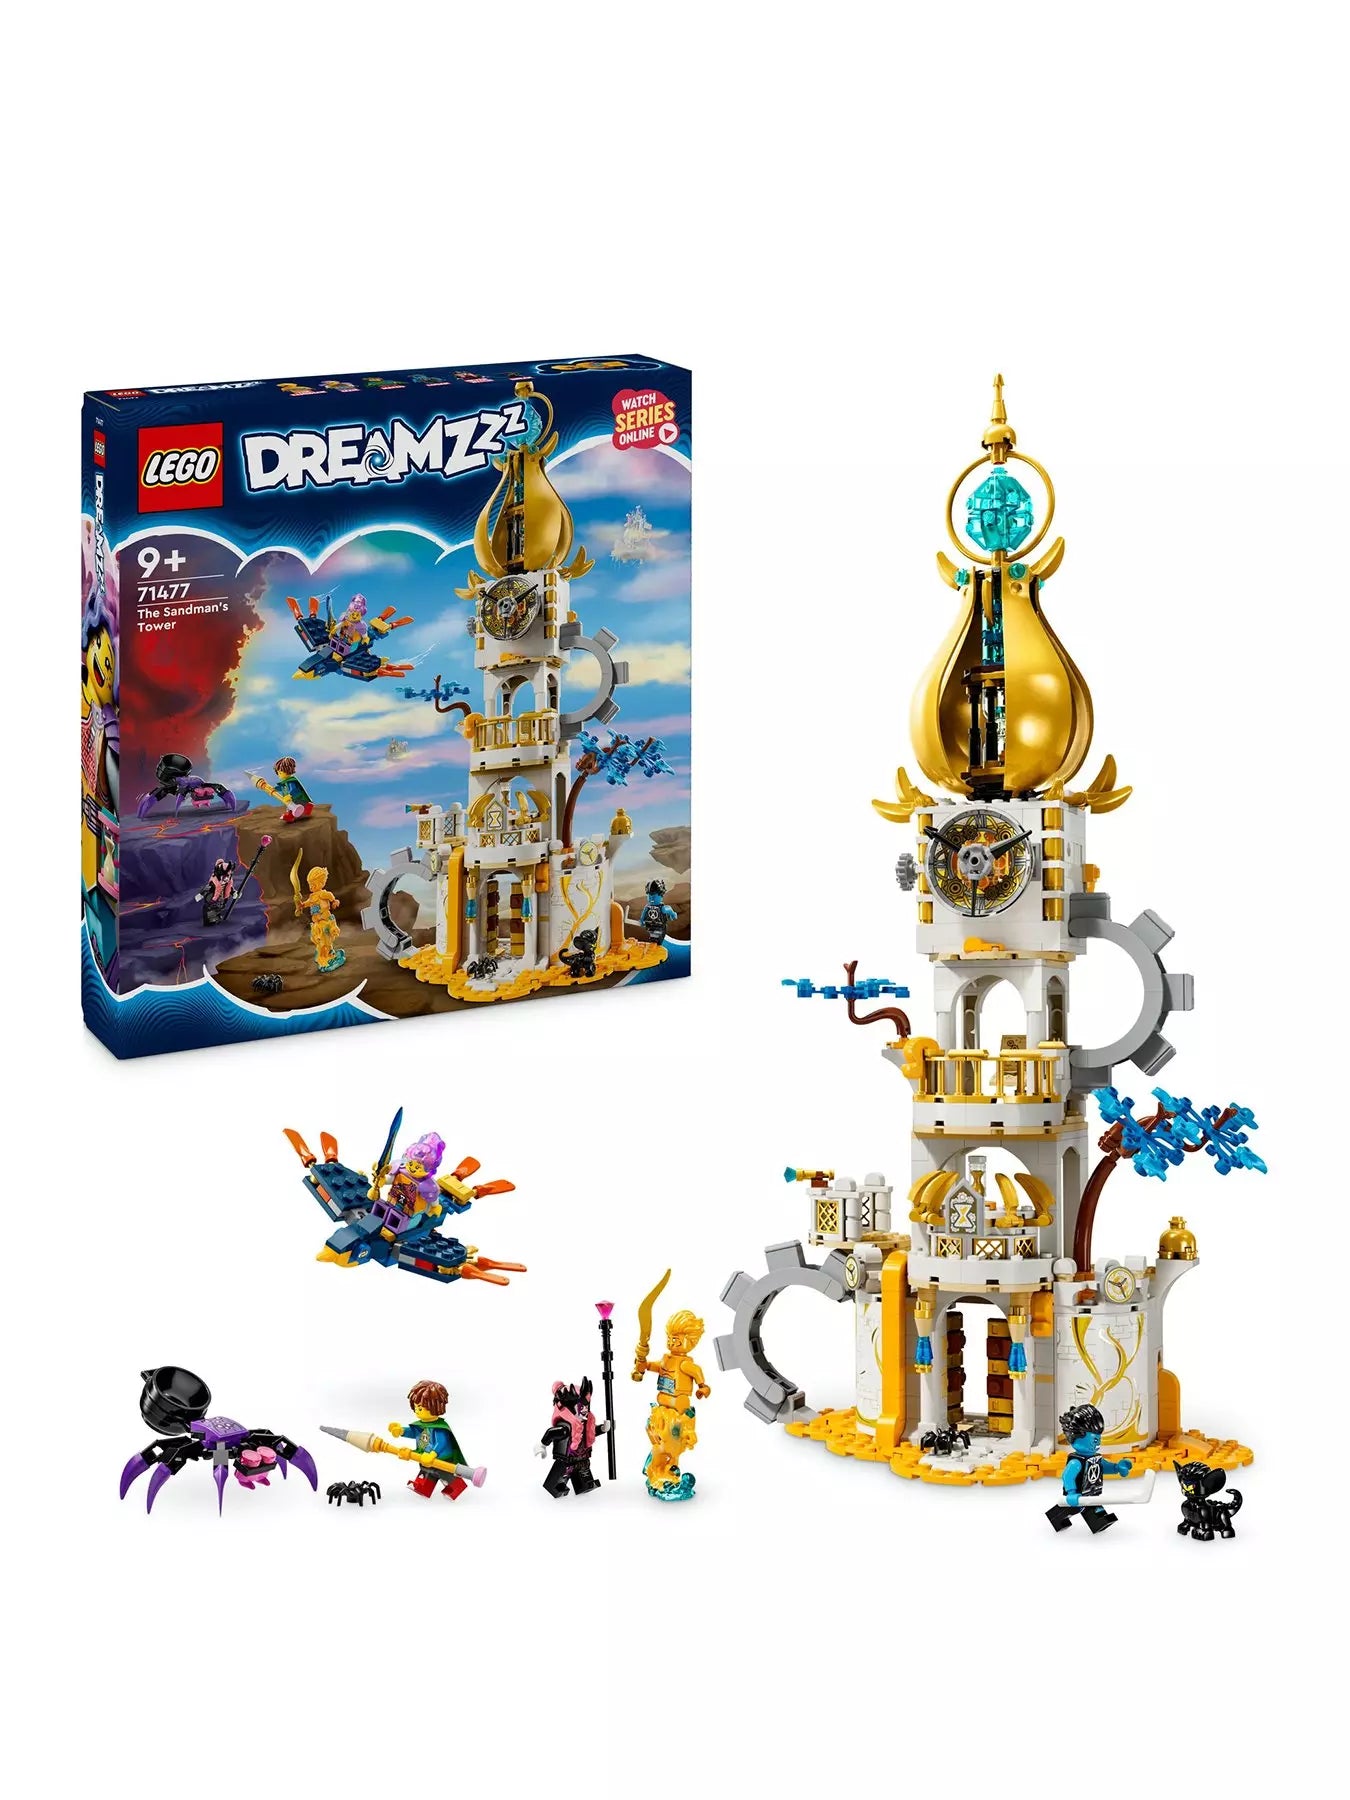 Lego Dreamzzz 71477 The Sandman's Tower